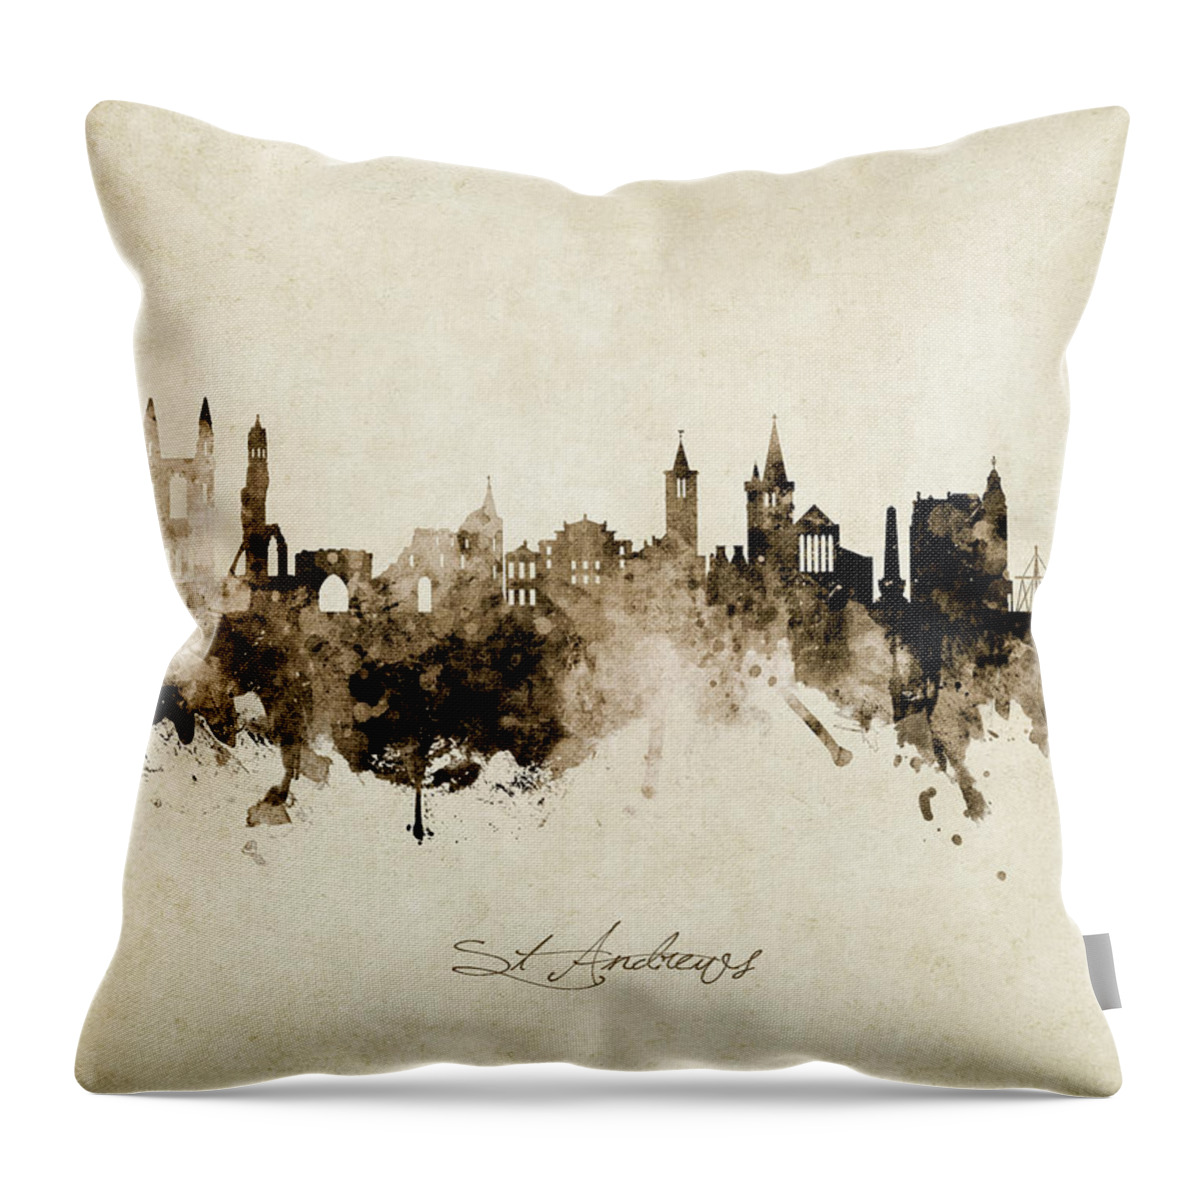 St Andrews Throw Pillow featuring the digital art St Andrews Scotland Skyline #12 by Michael Tompsett